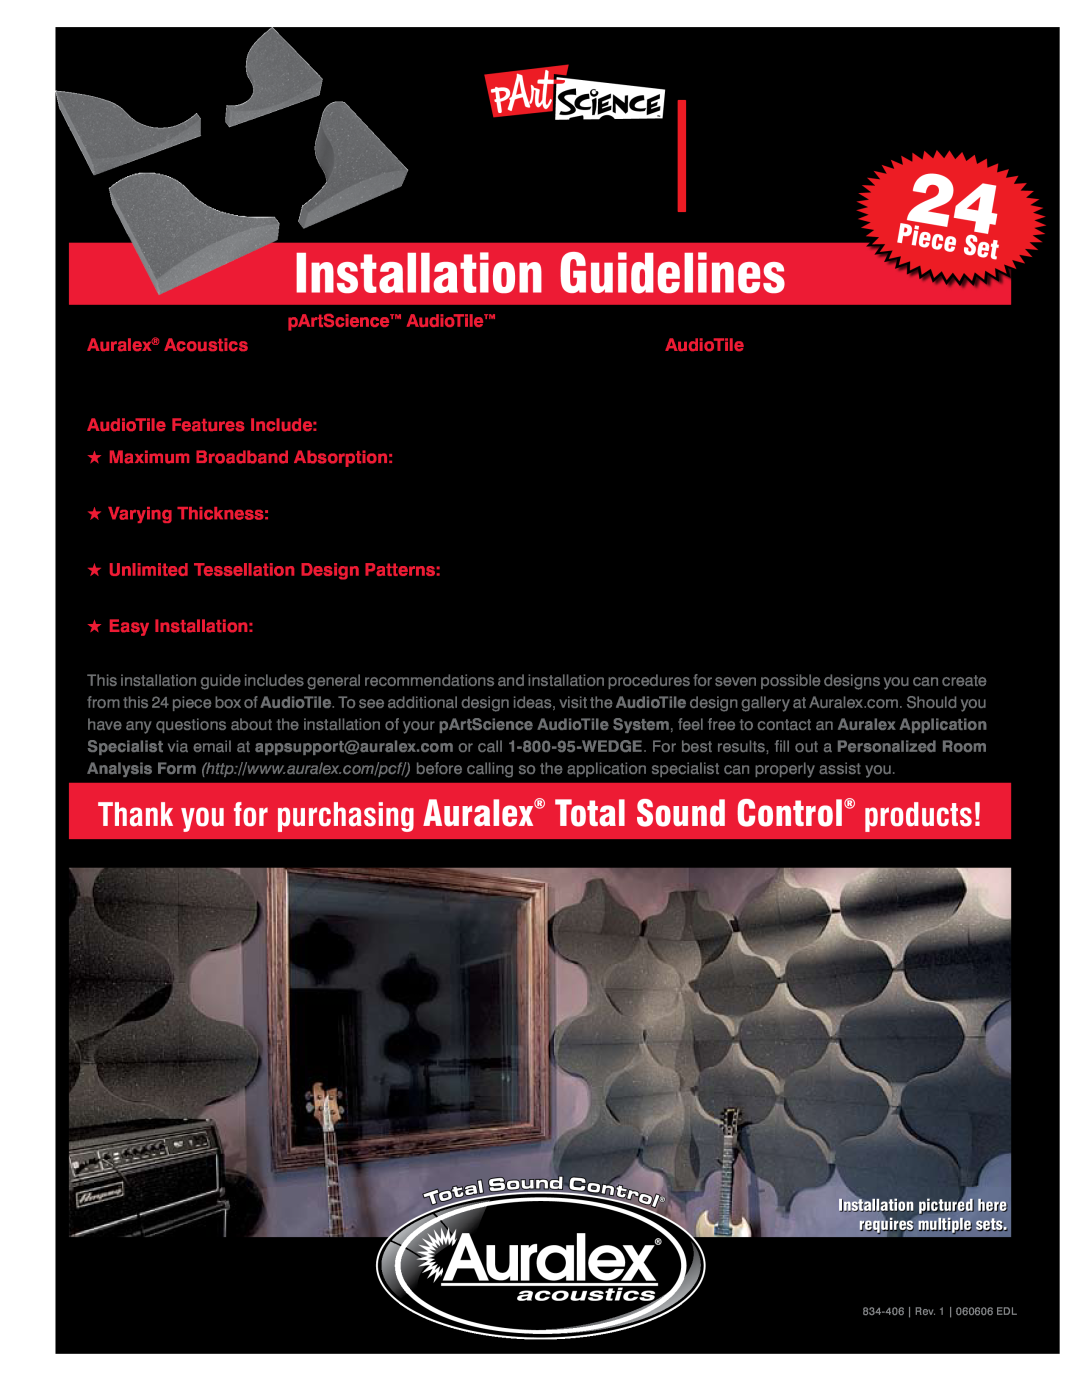 Auralex Acoustics ShockWave manual AudioTile Features Include, Installation Guidelines 